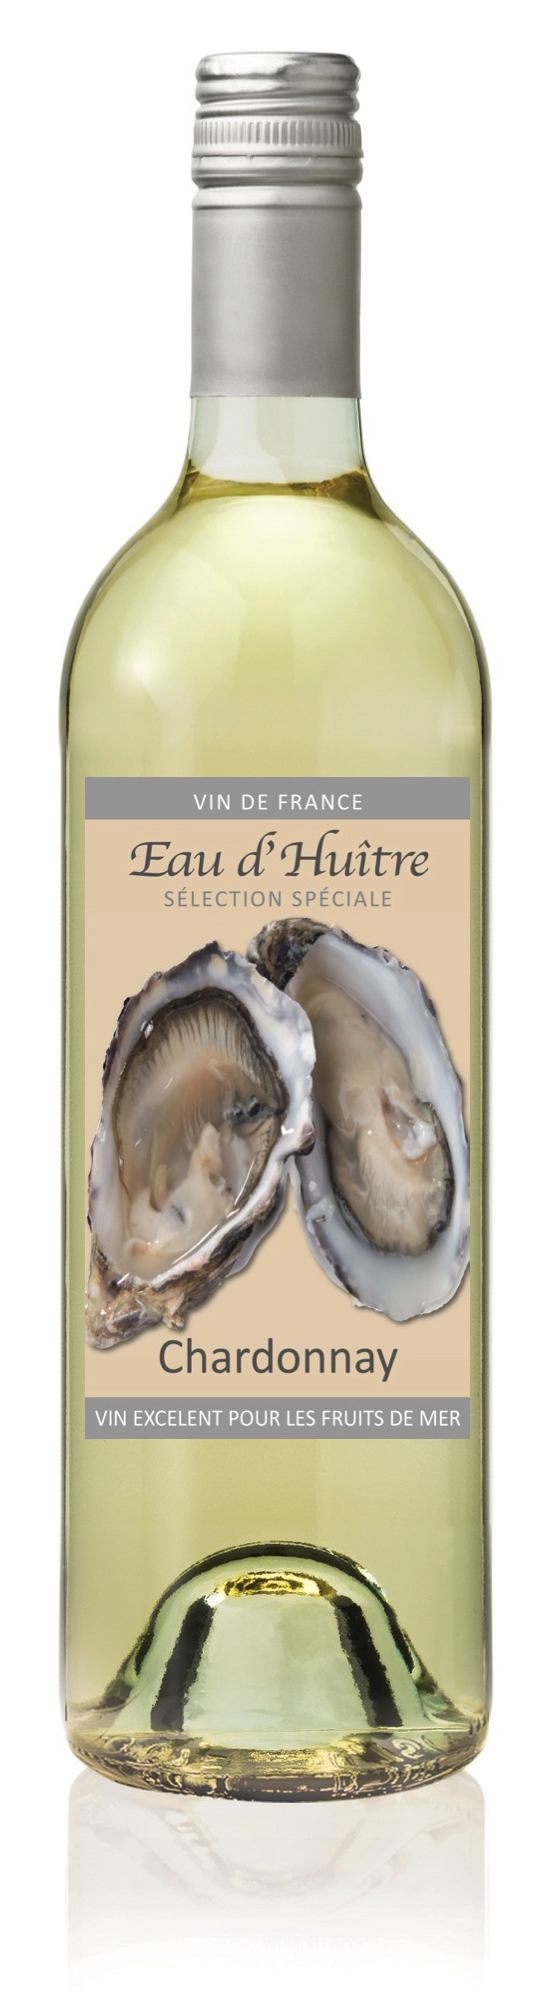 60599 Eau d'Huitre Chardonnay oesterwater 0,75 liter